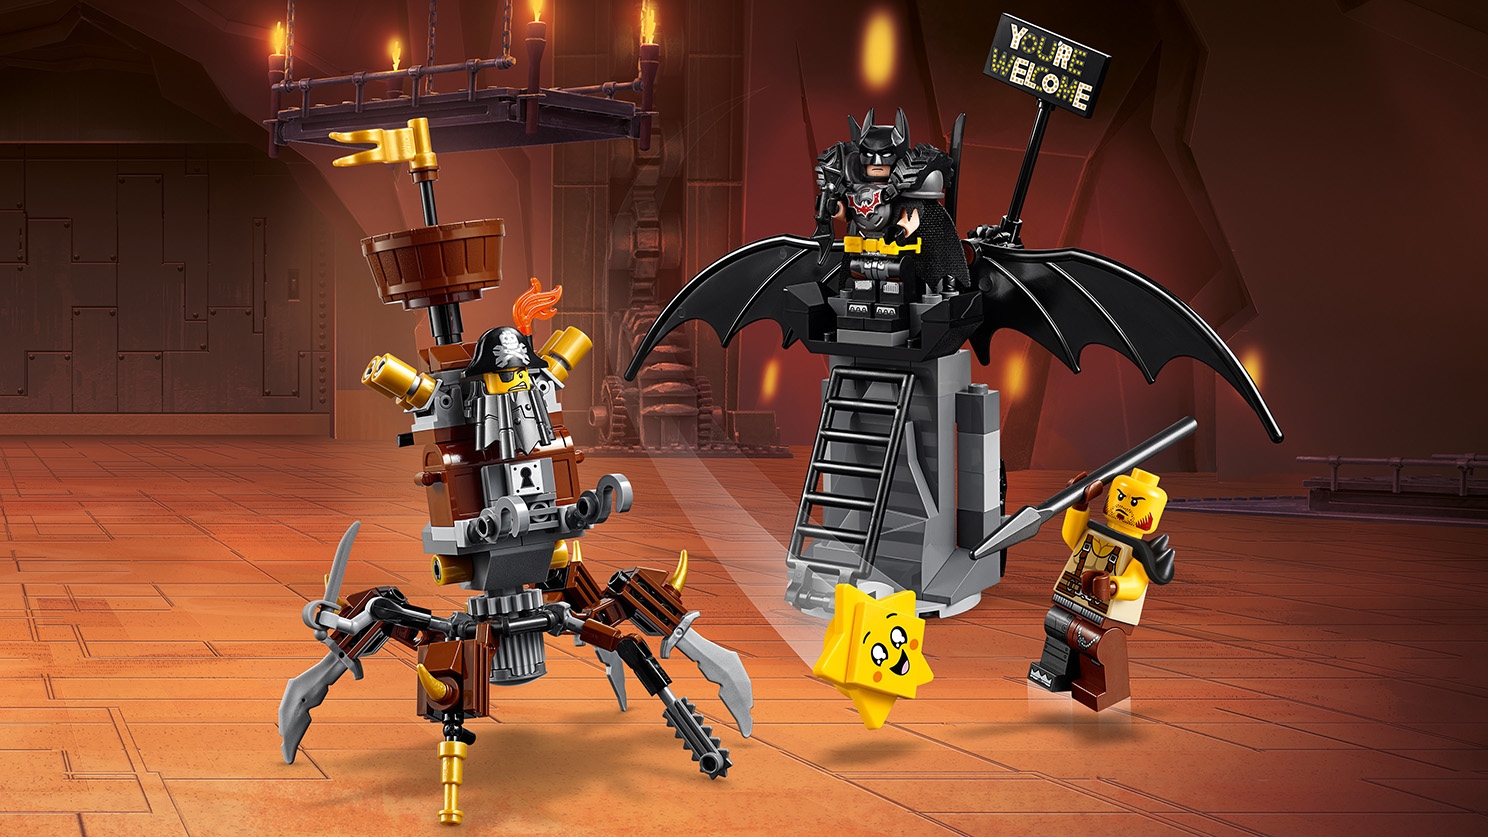 LEGO Batman Shows Up in New LEGO Movie 2 Set